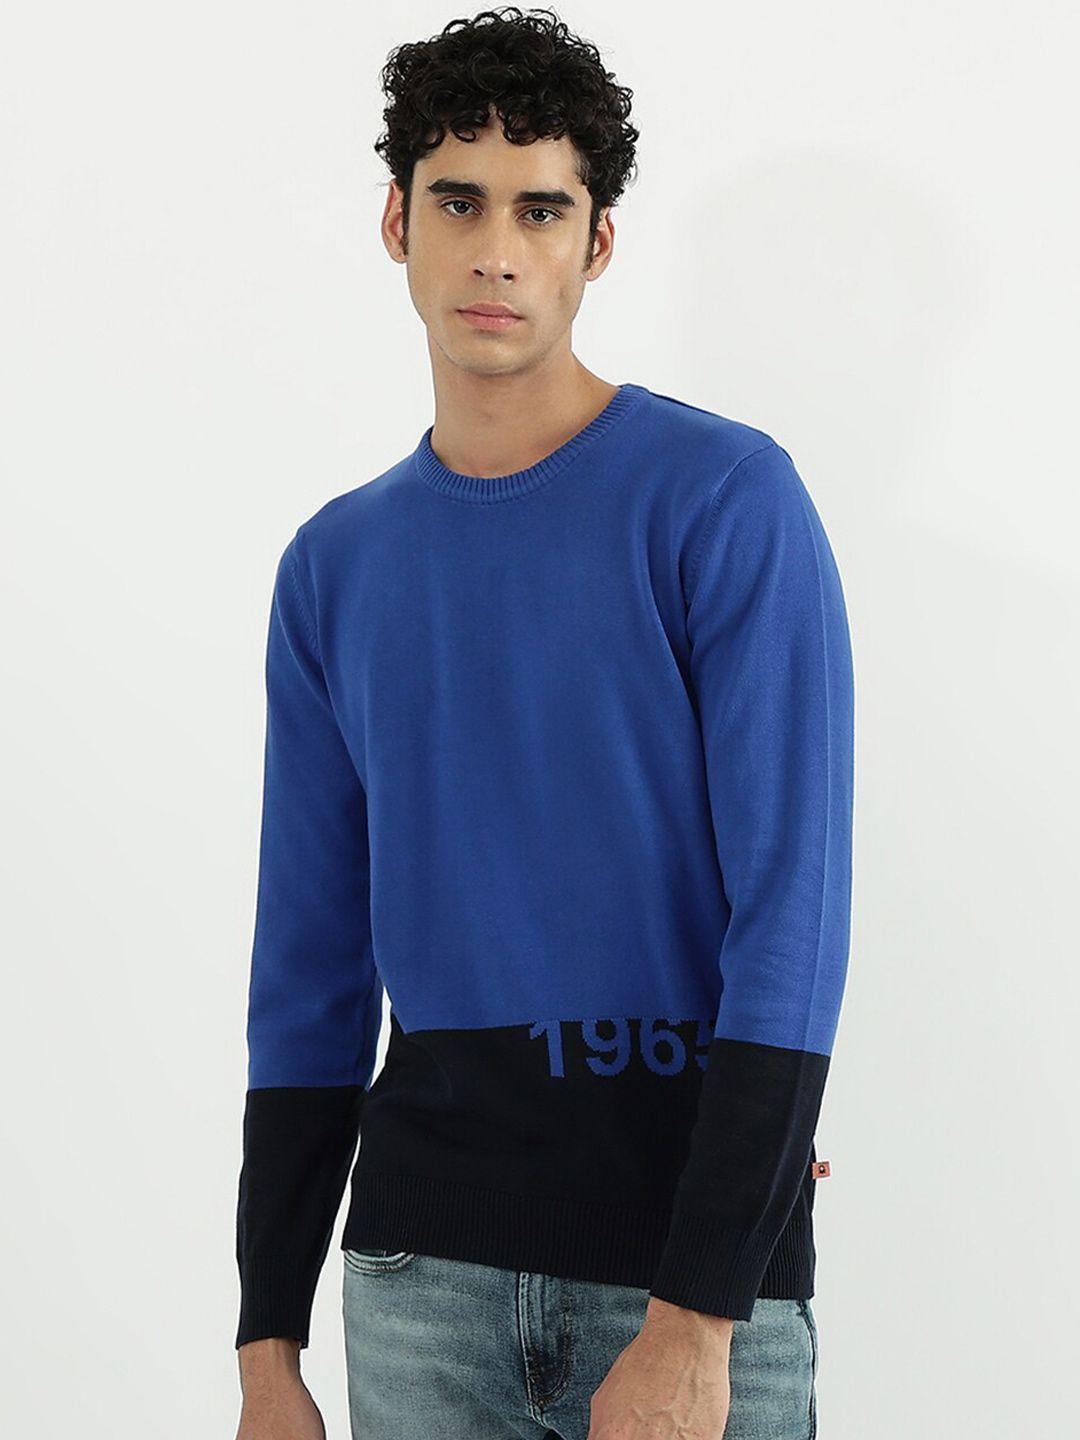 united colors of benetton men blue colourblocked sweatshirt